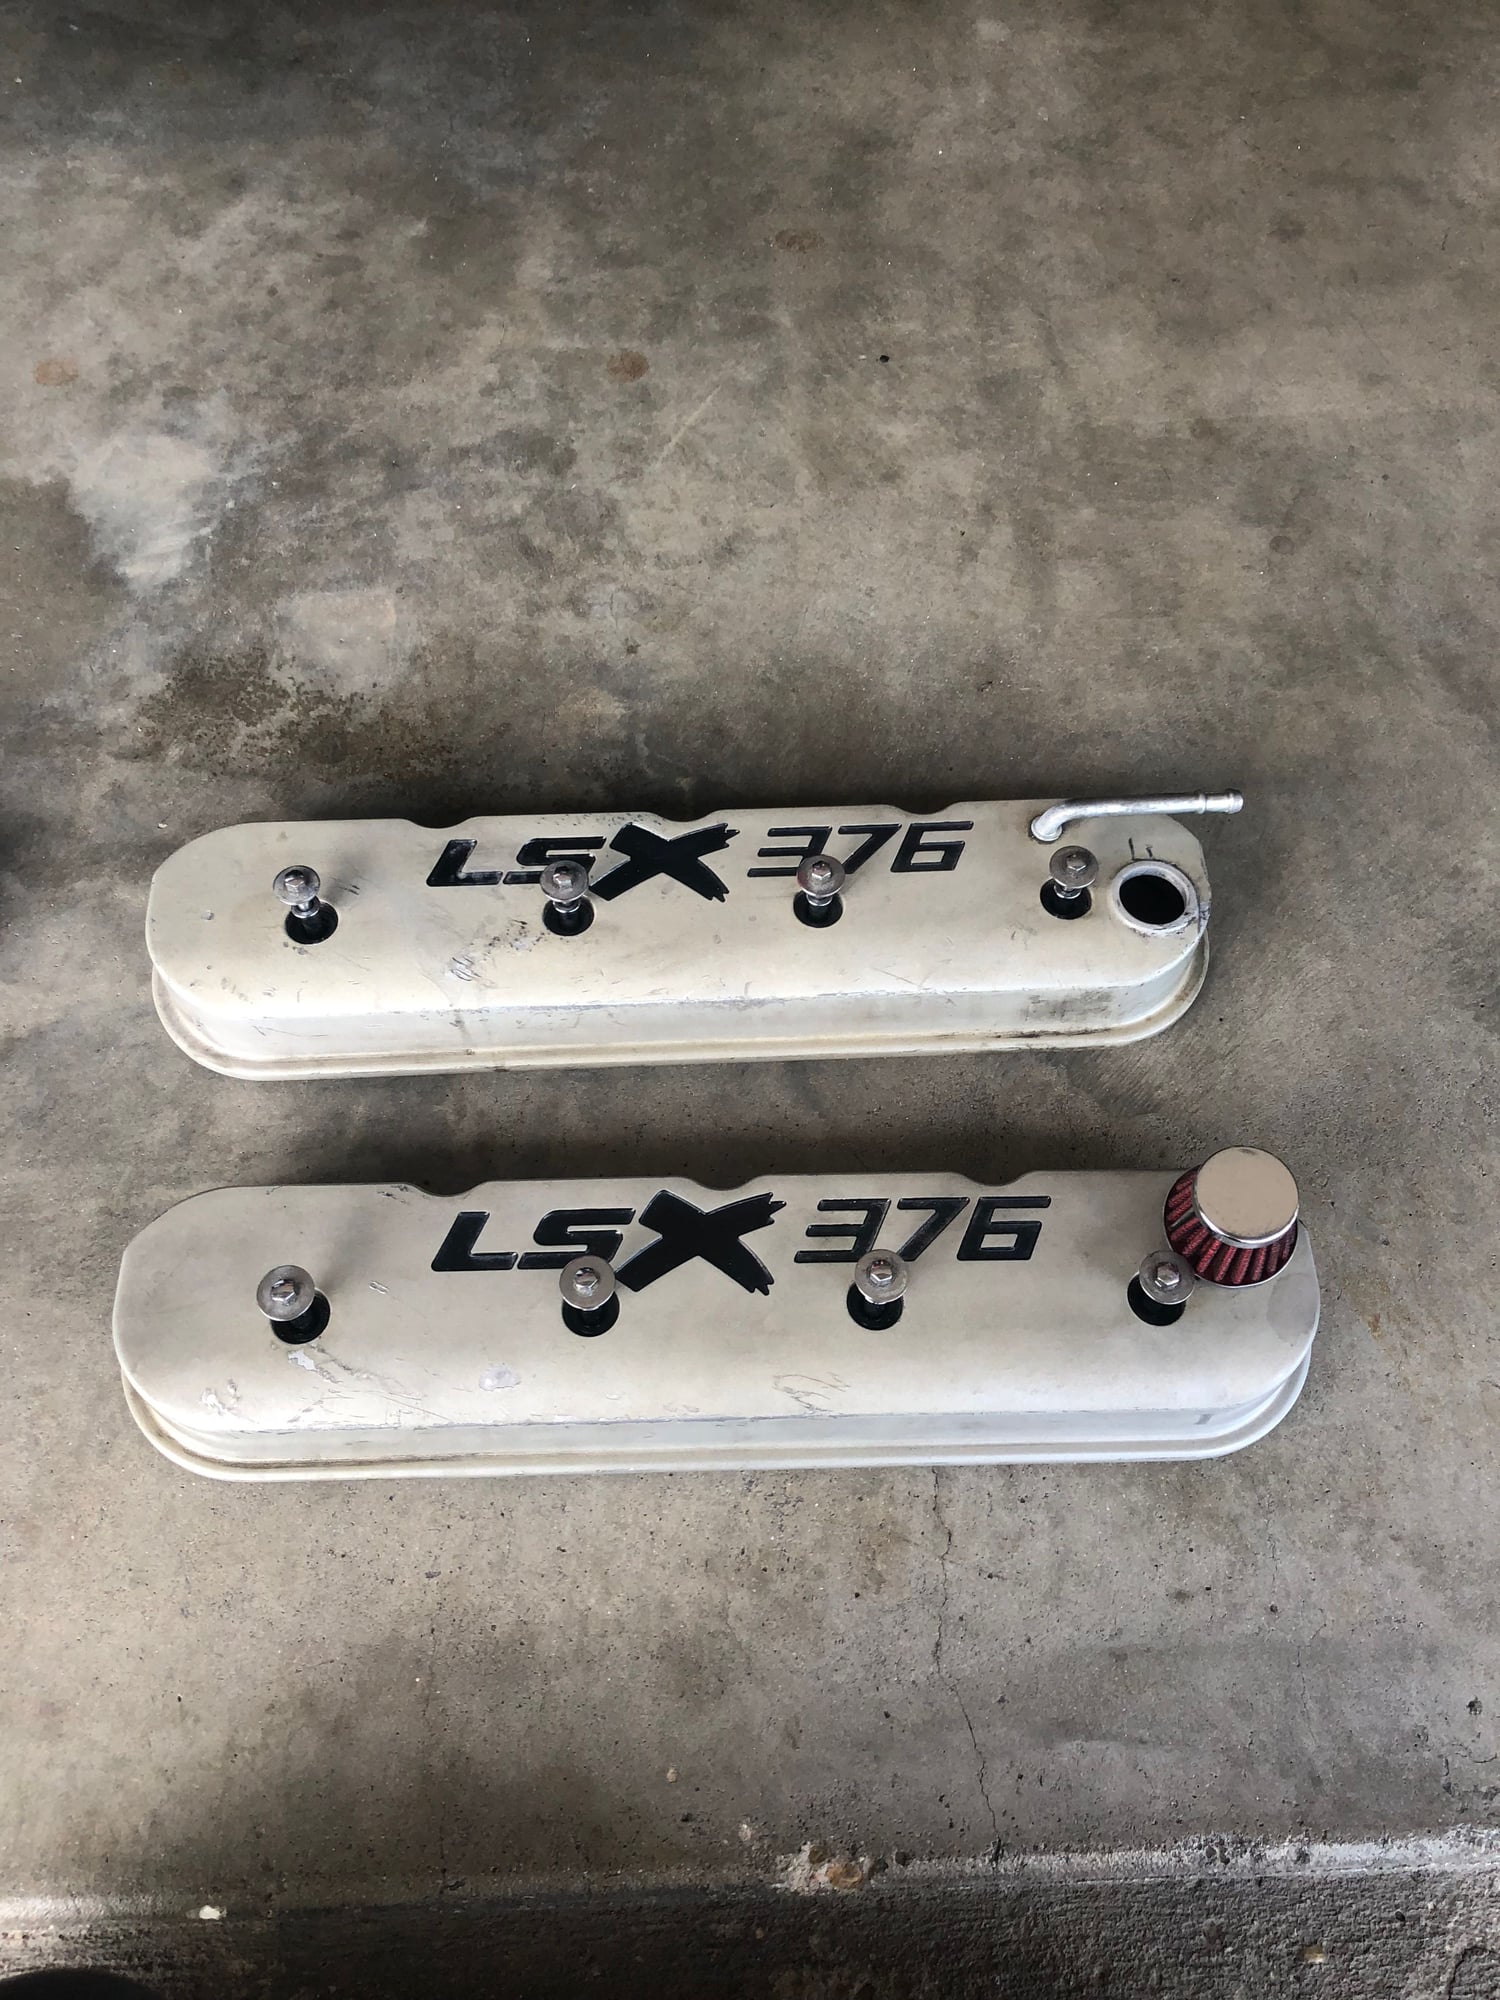  - Lsx 376 valve covers - Santa Barbara, CA 93101, United States